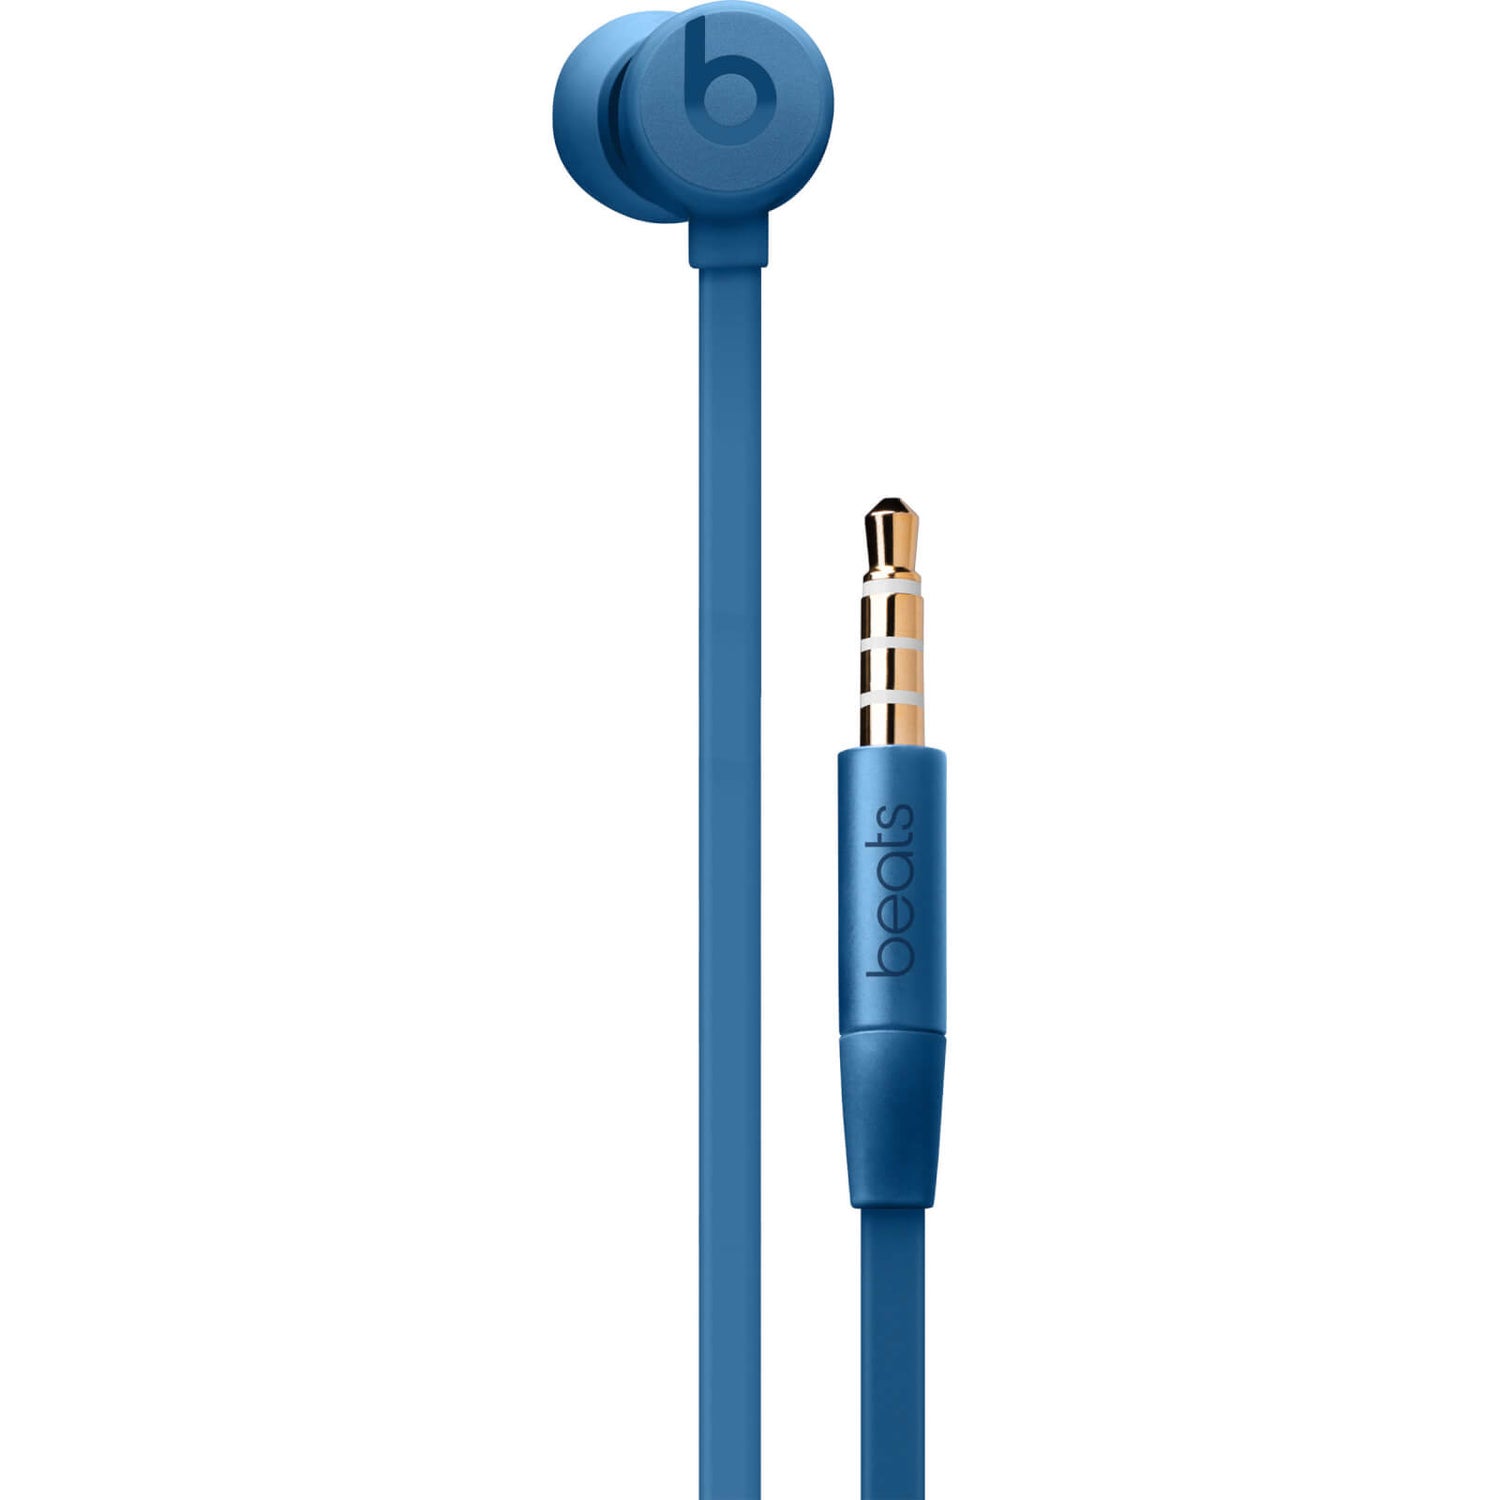 Beats urBeats3 Earphones with 3.5mm Jack Connector - Blue